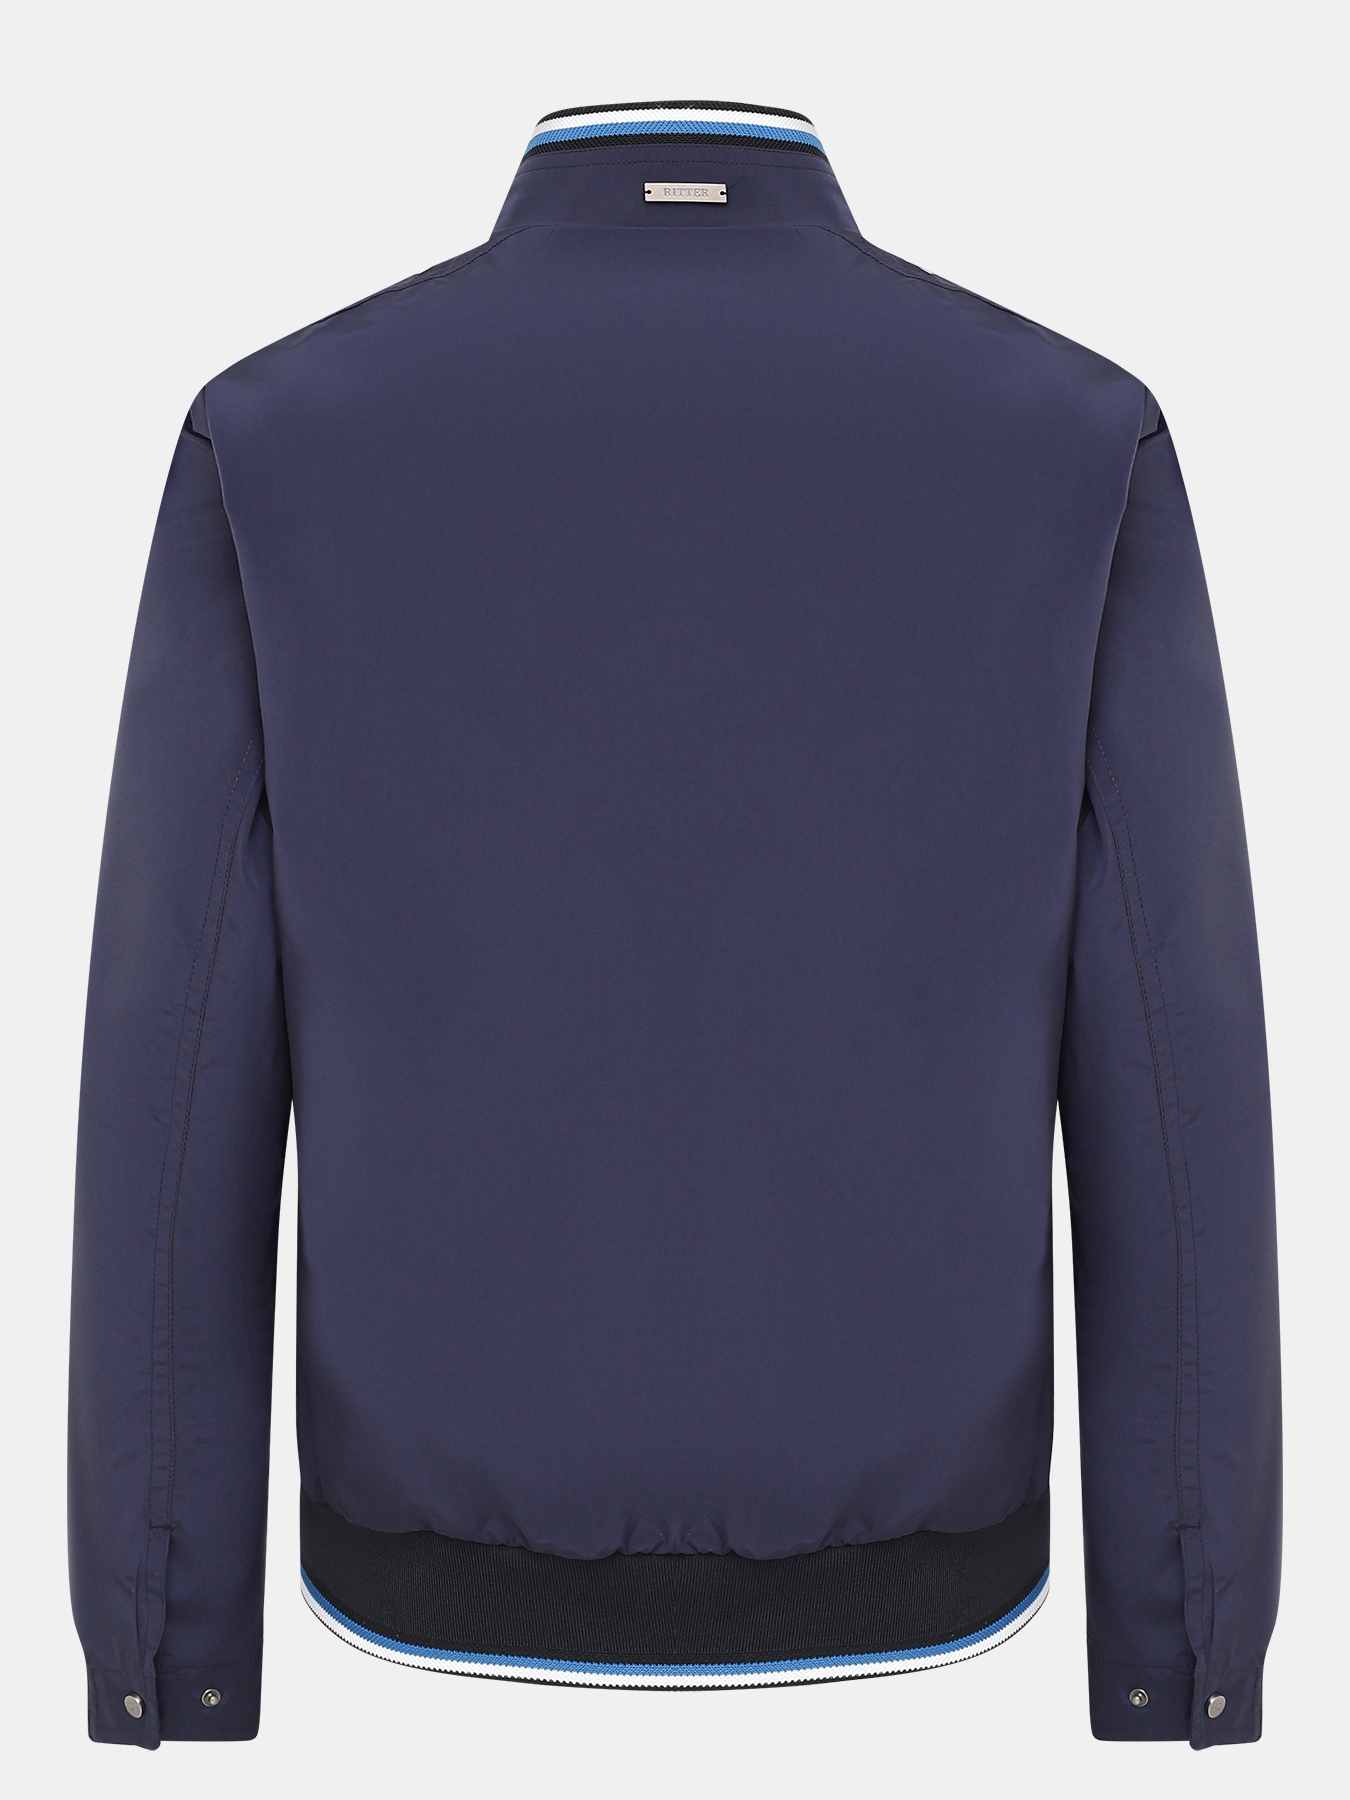 Куртка Ritter 402899-024, цвет синий, размер 46 - фото 3